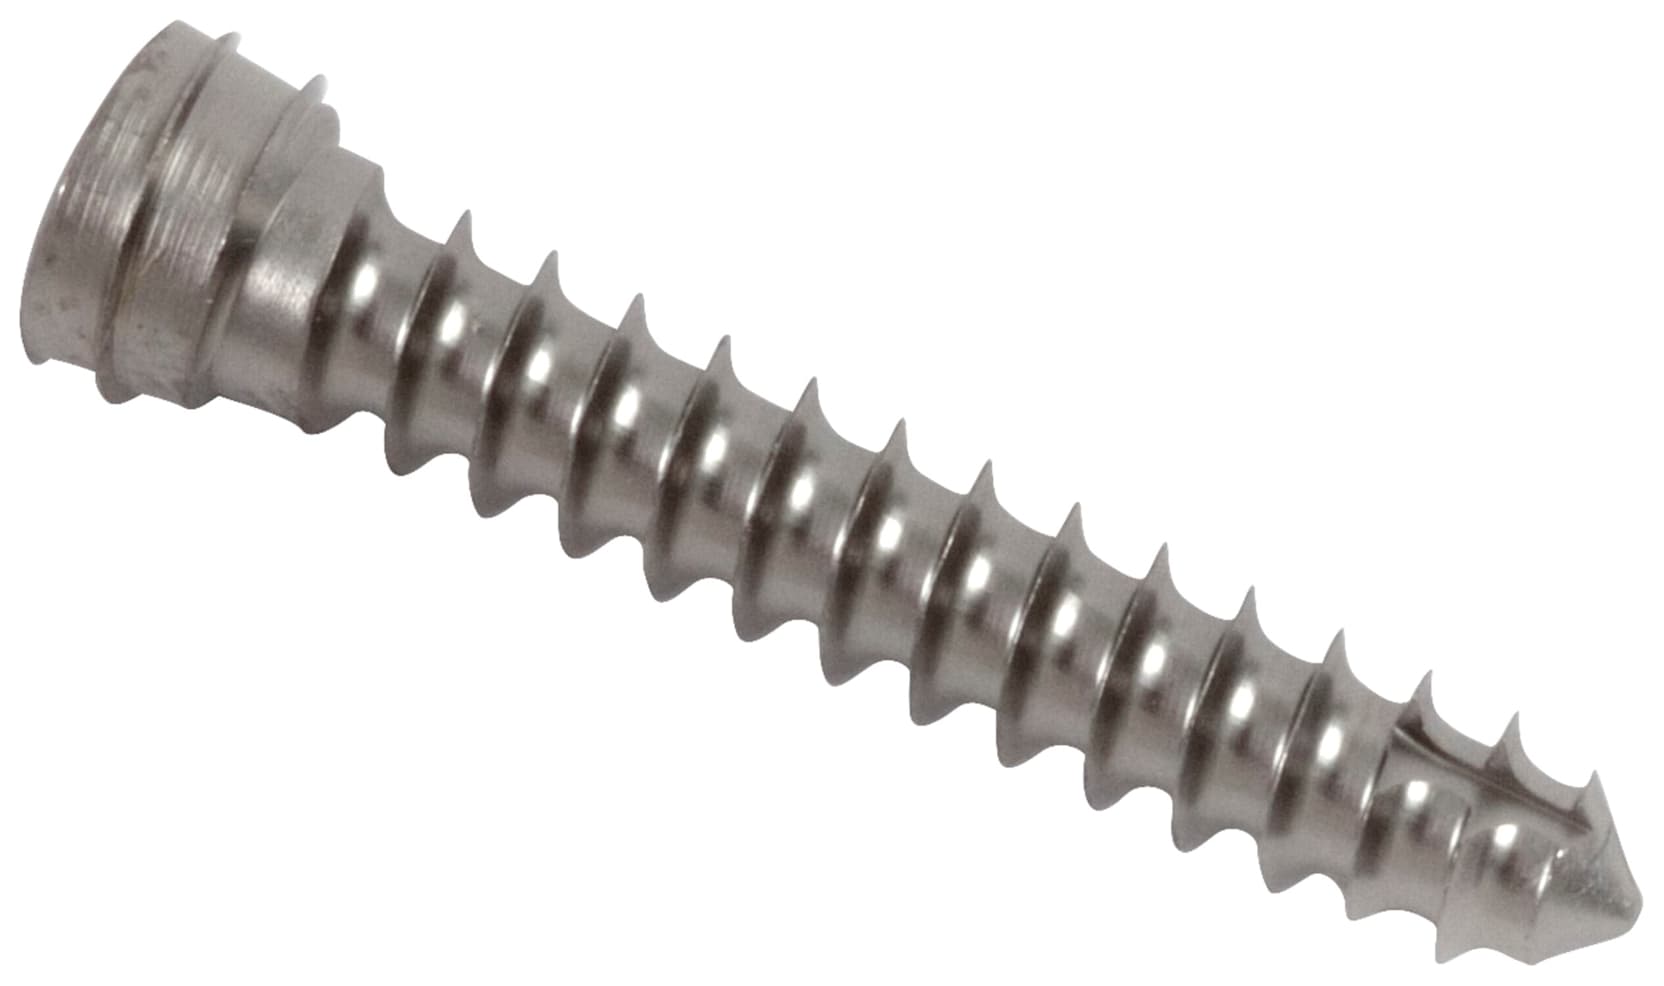 Cortical Locking Screw, 3.5 mm x 20 mm